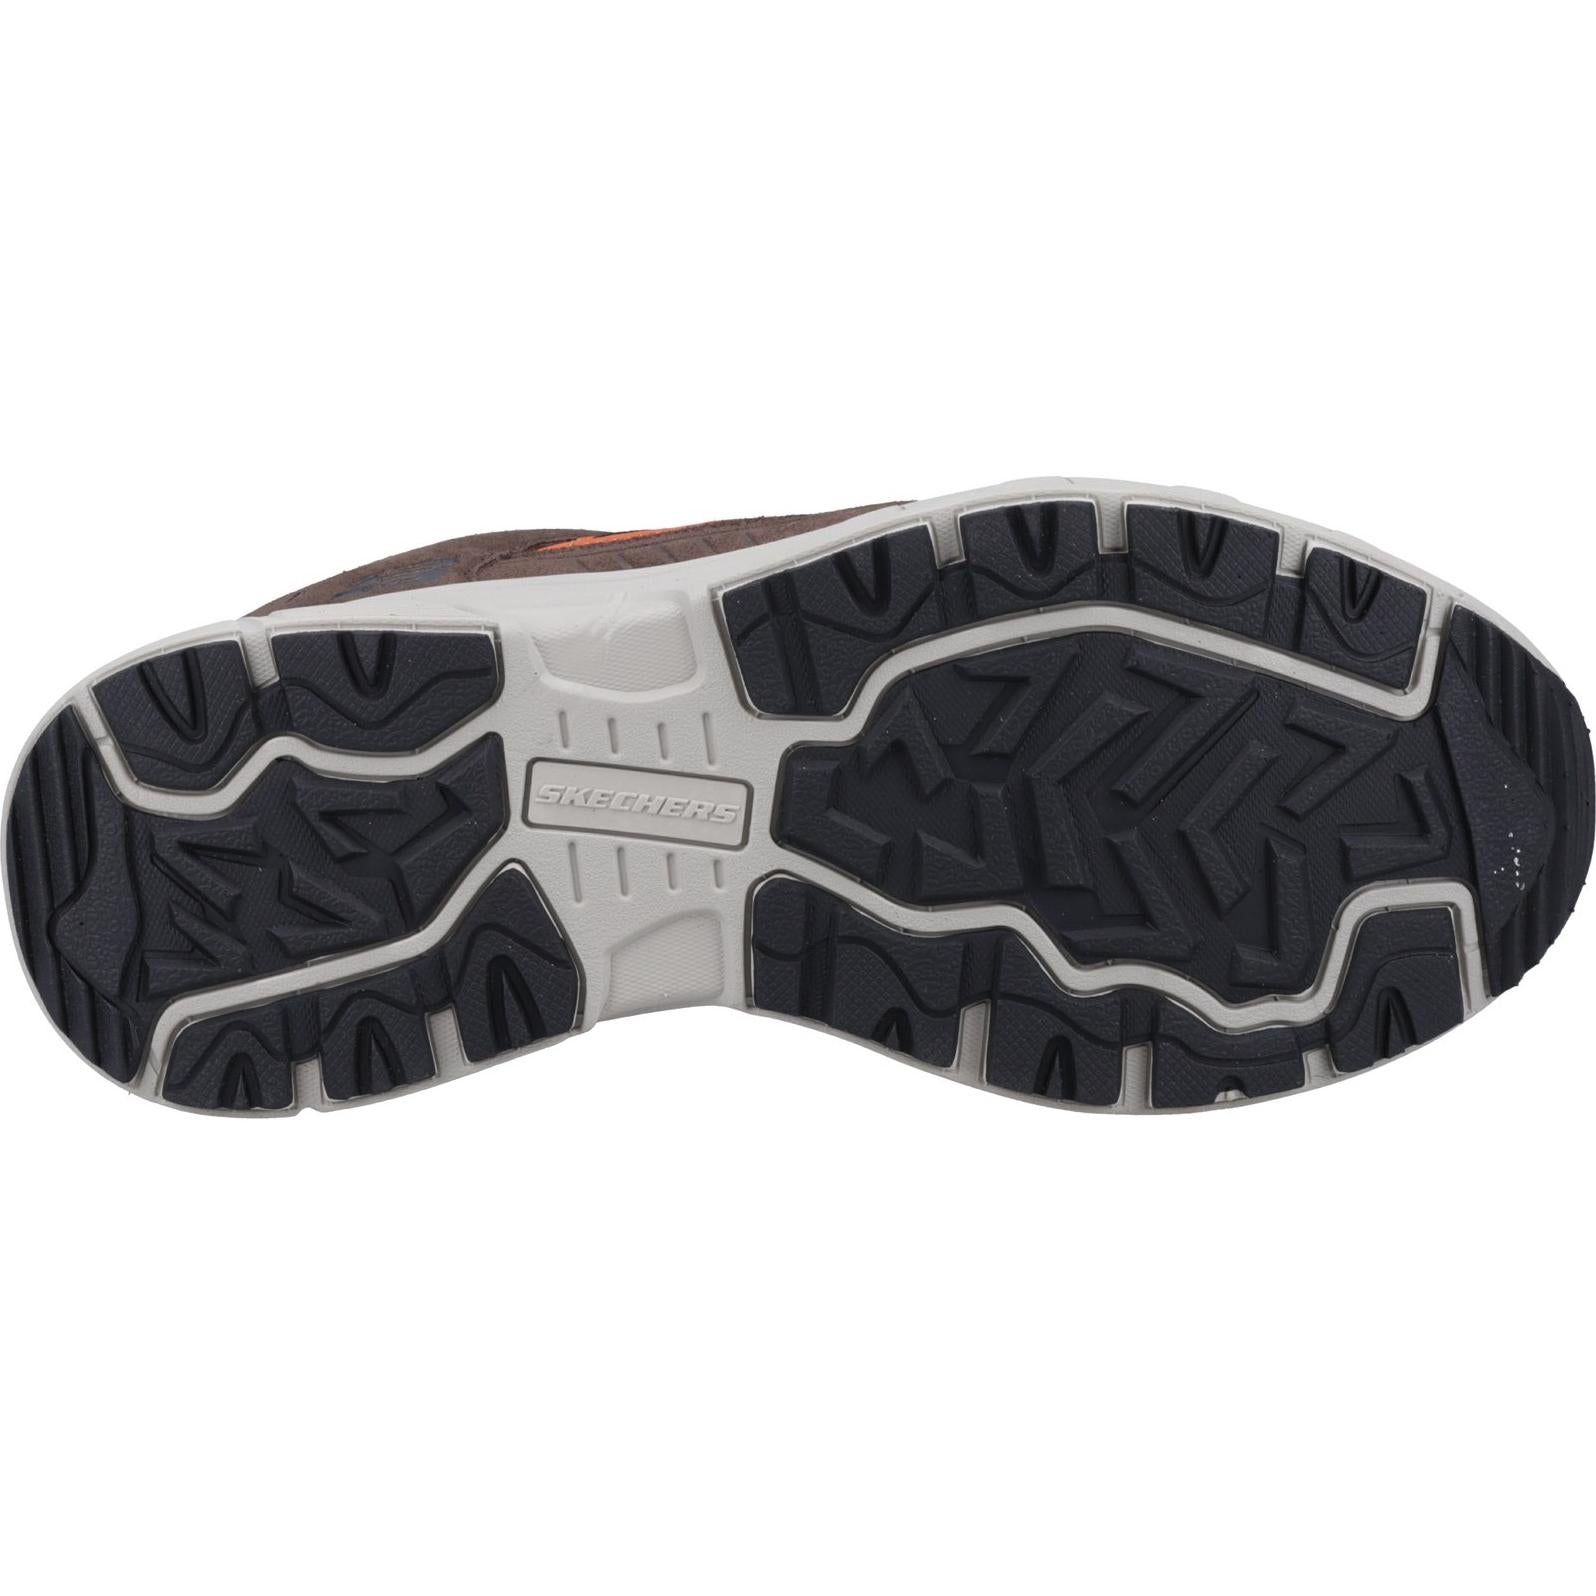 Skechers Oak Canyon Duelist Sports Shoes